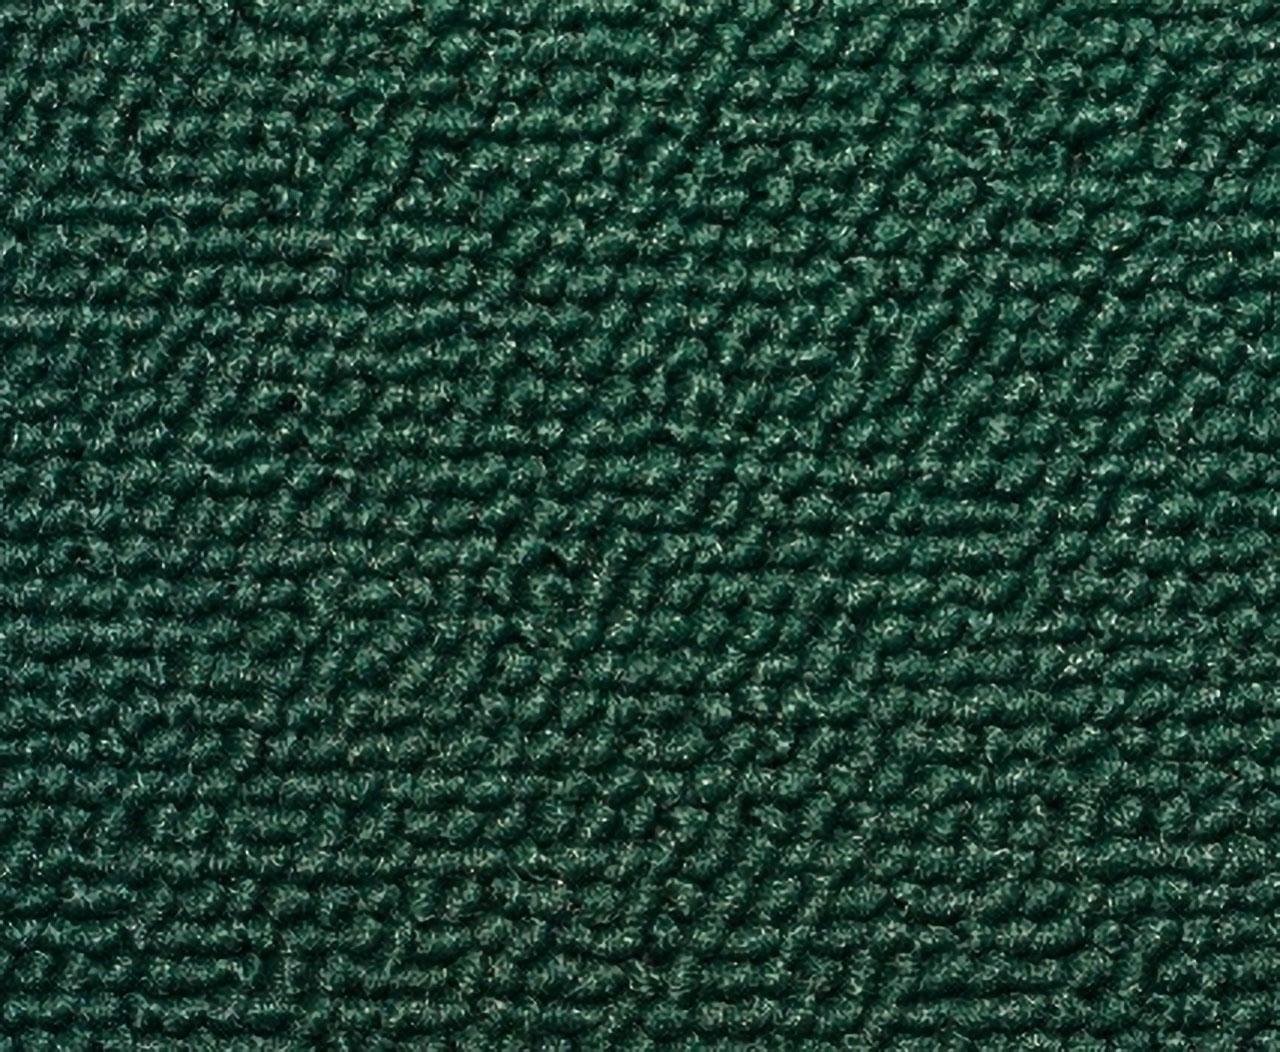 Holden Standard EJ Standard Sedan A98 Curio Green Carpet (Image 1 of 1)